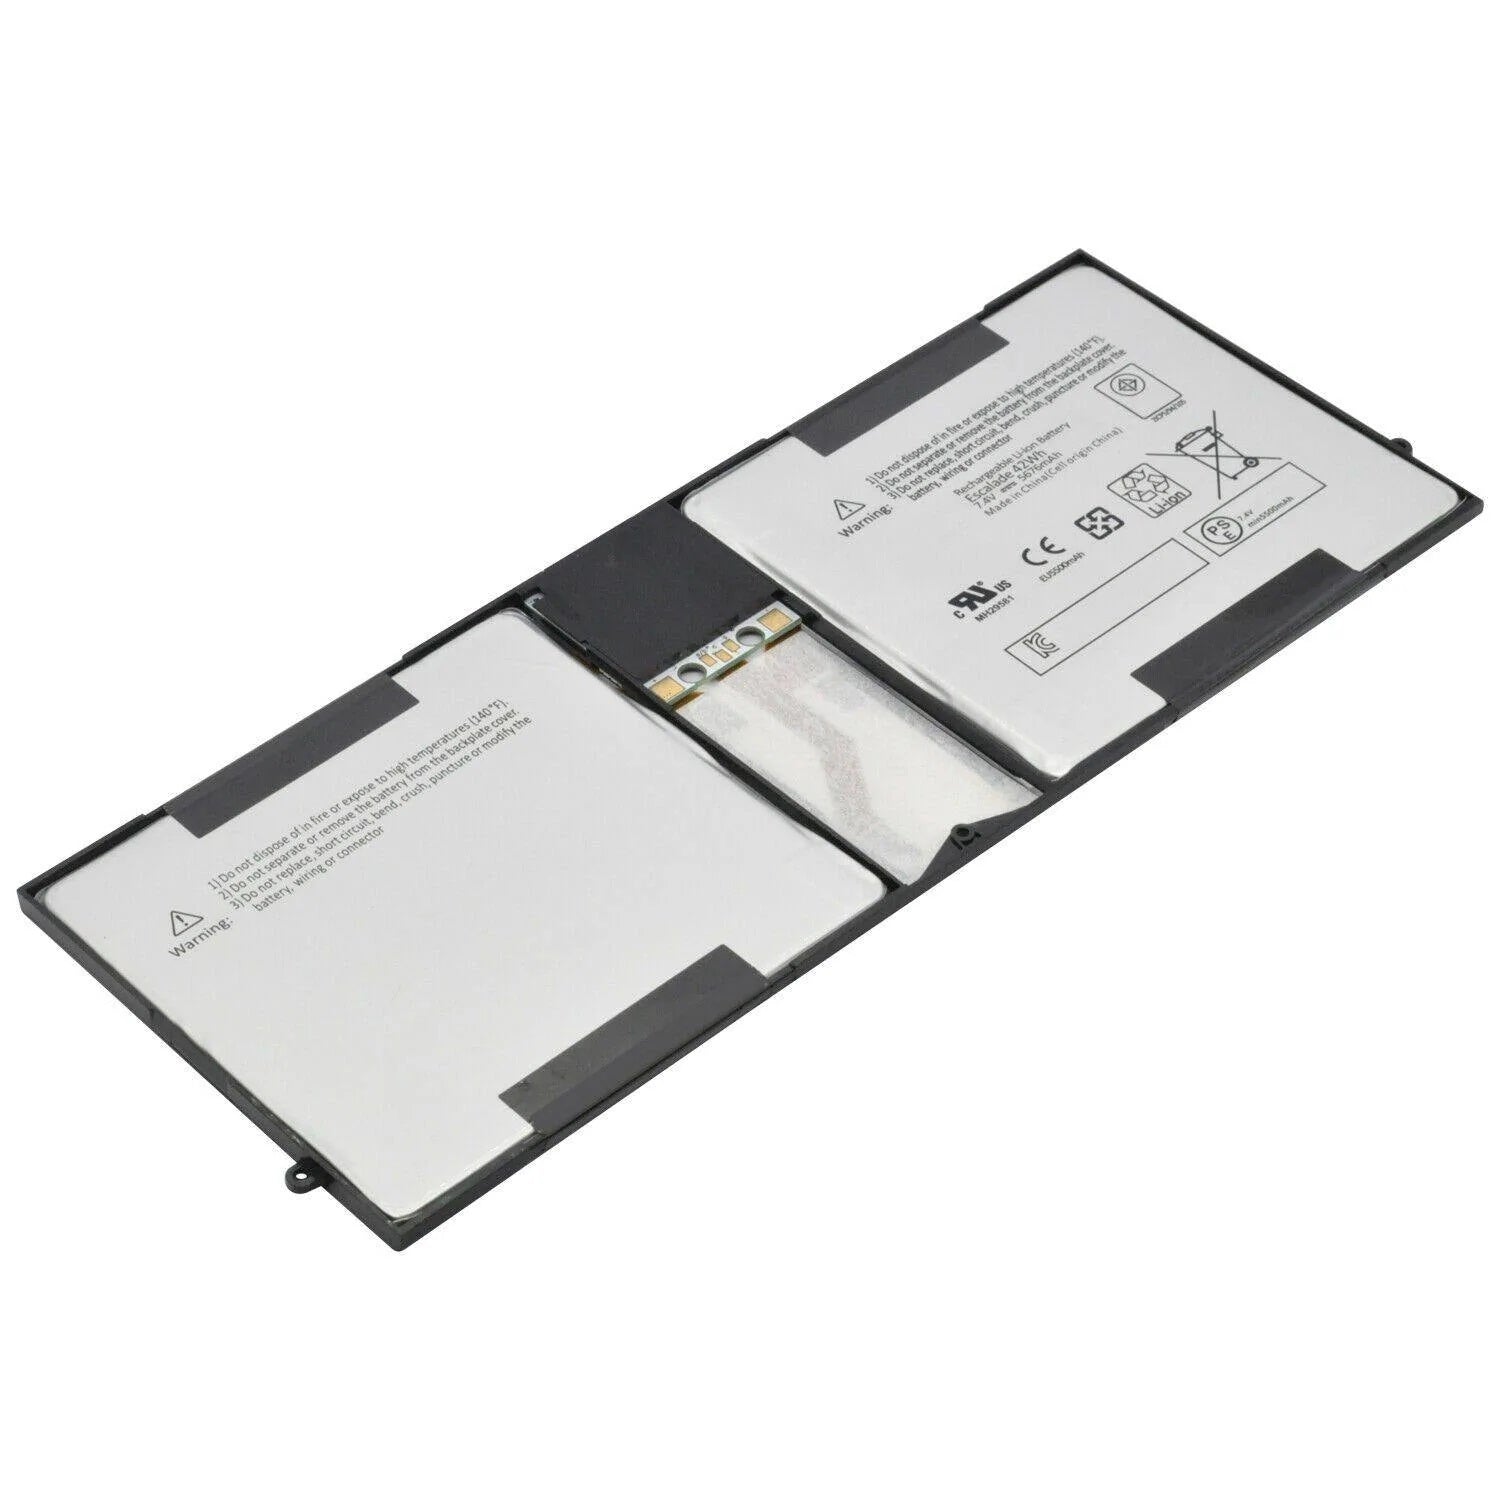 Microsoft P21GU9 New Genuine Battery Surface Pro 1 1514 2 1601 Tablet 2ICP5/94/104